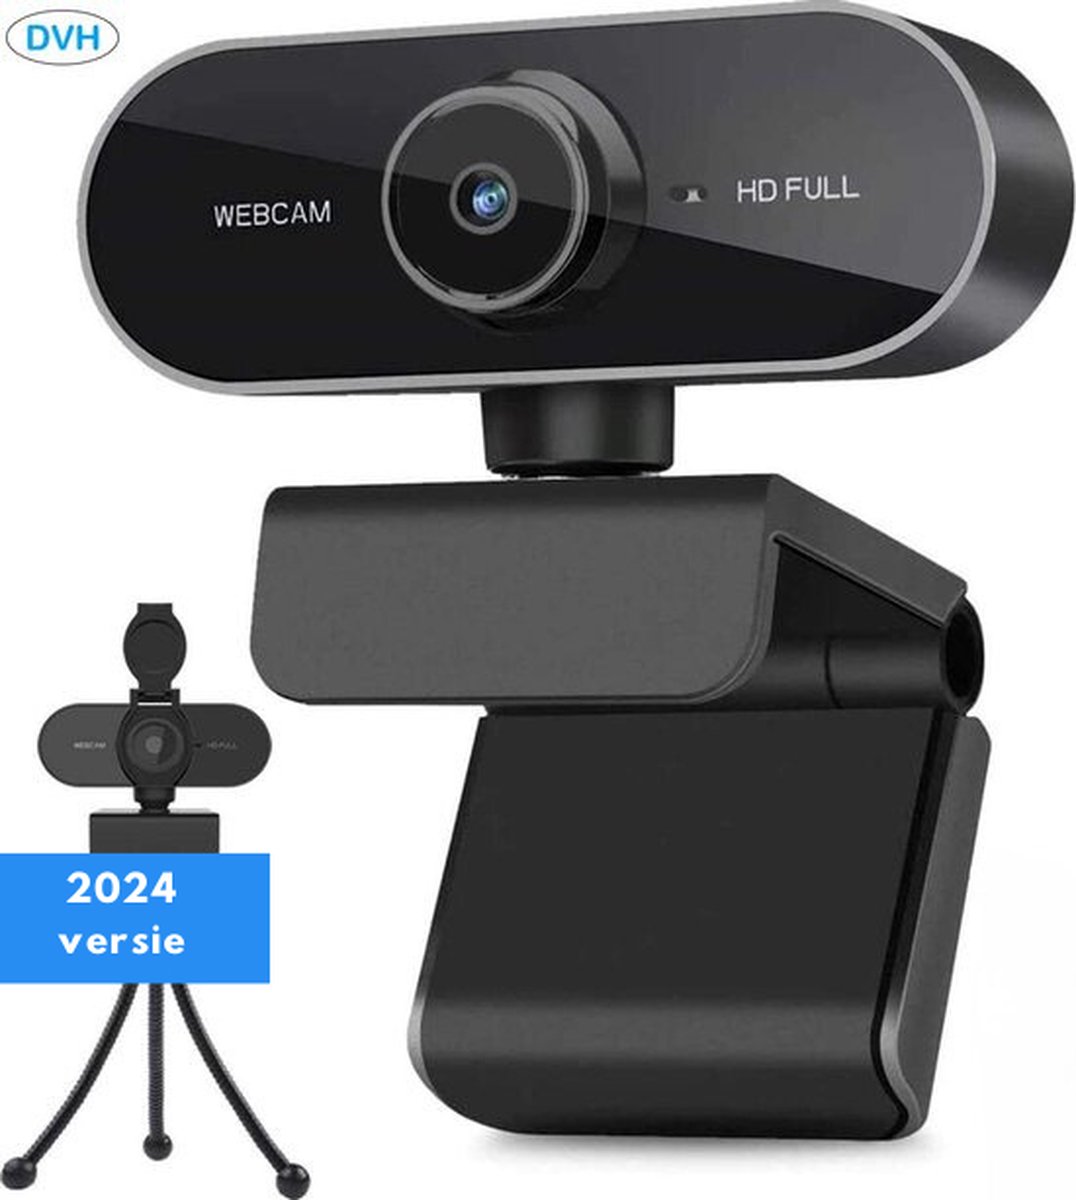 DVH Webcam voor Pc met Microfoon – Full HD 1080P – USB Aansluiting - Met Webcam Cover - Windows en Macbook